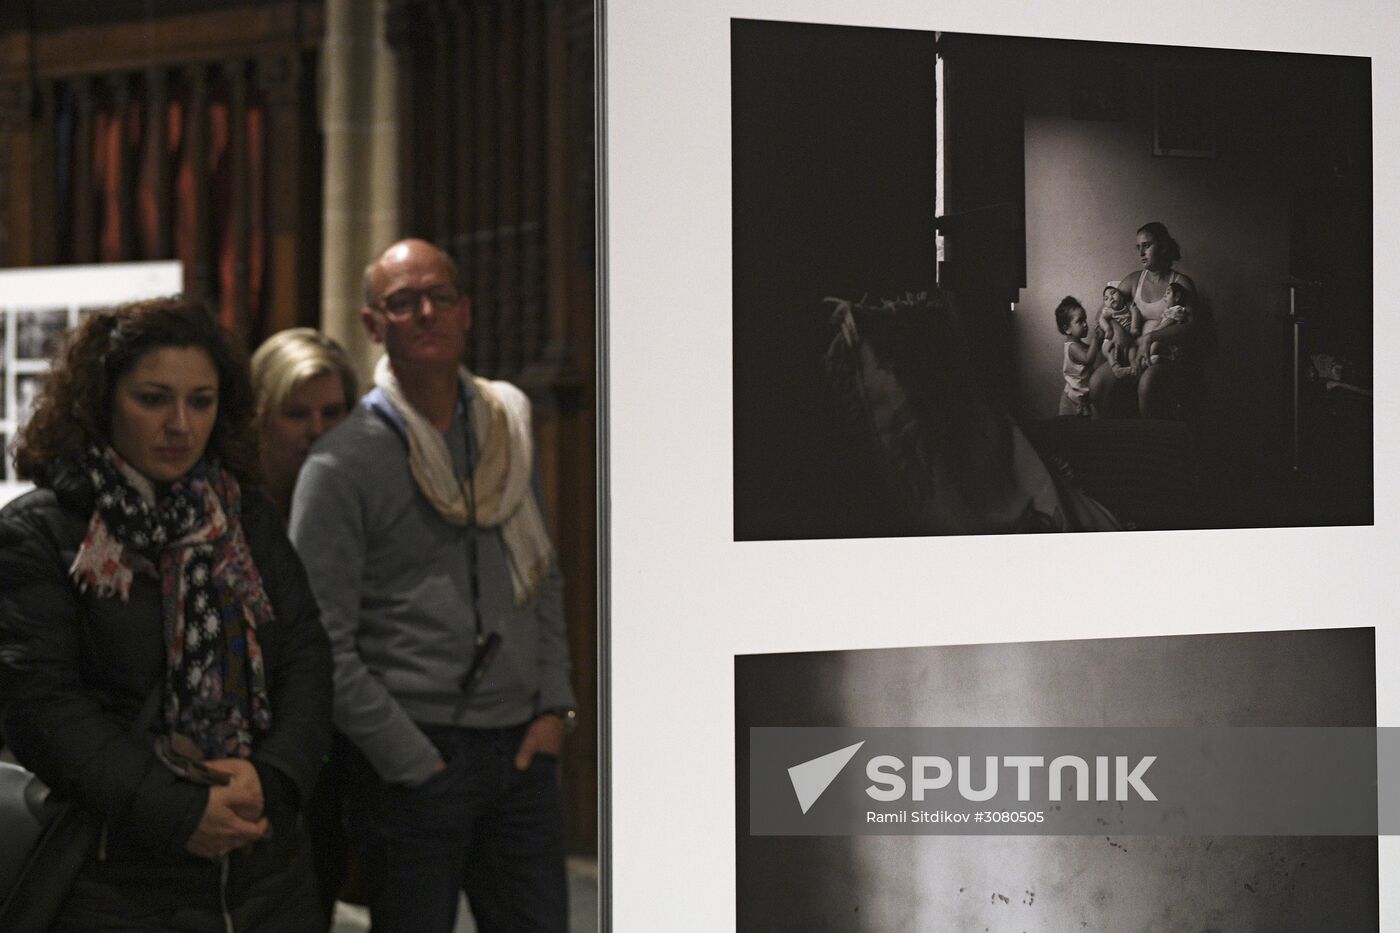 World Press Photo 2017 exhibition in Amsterdam